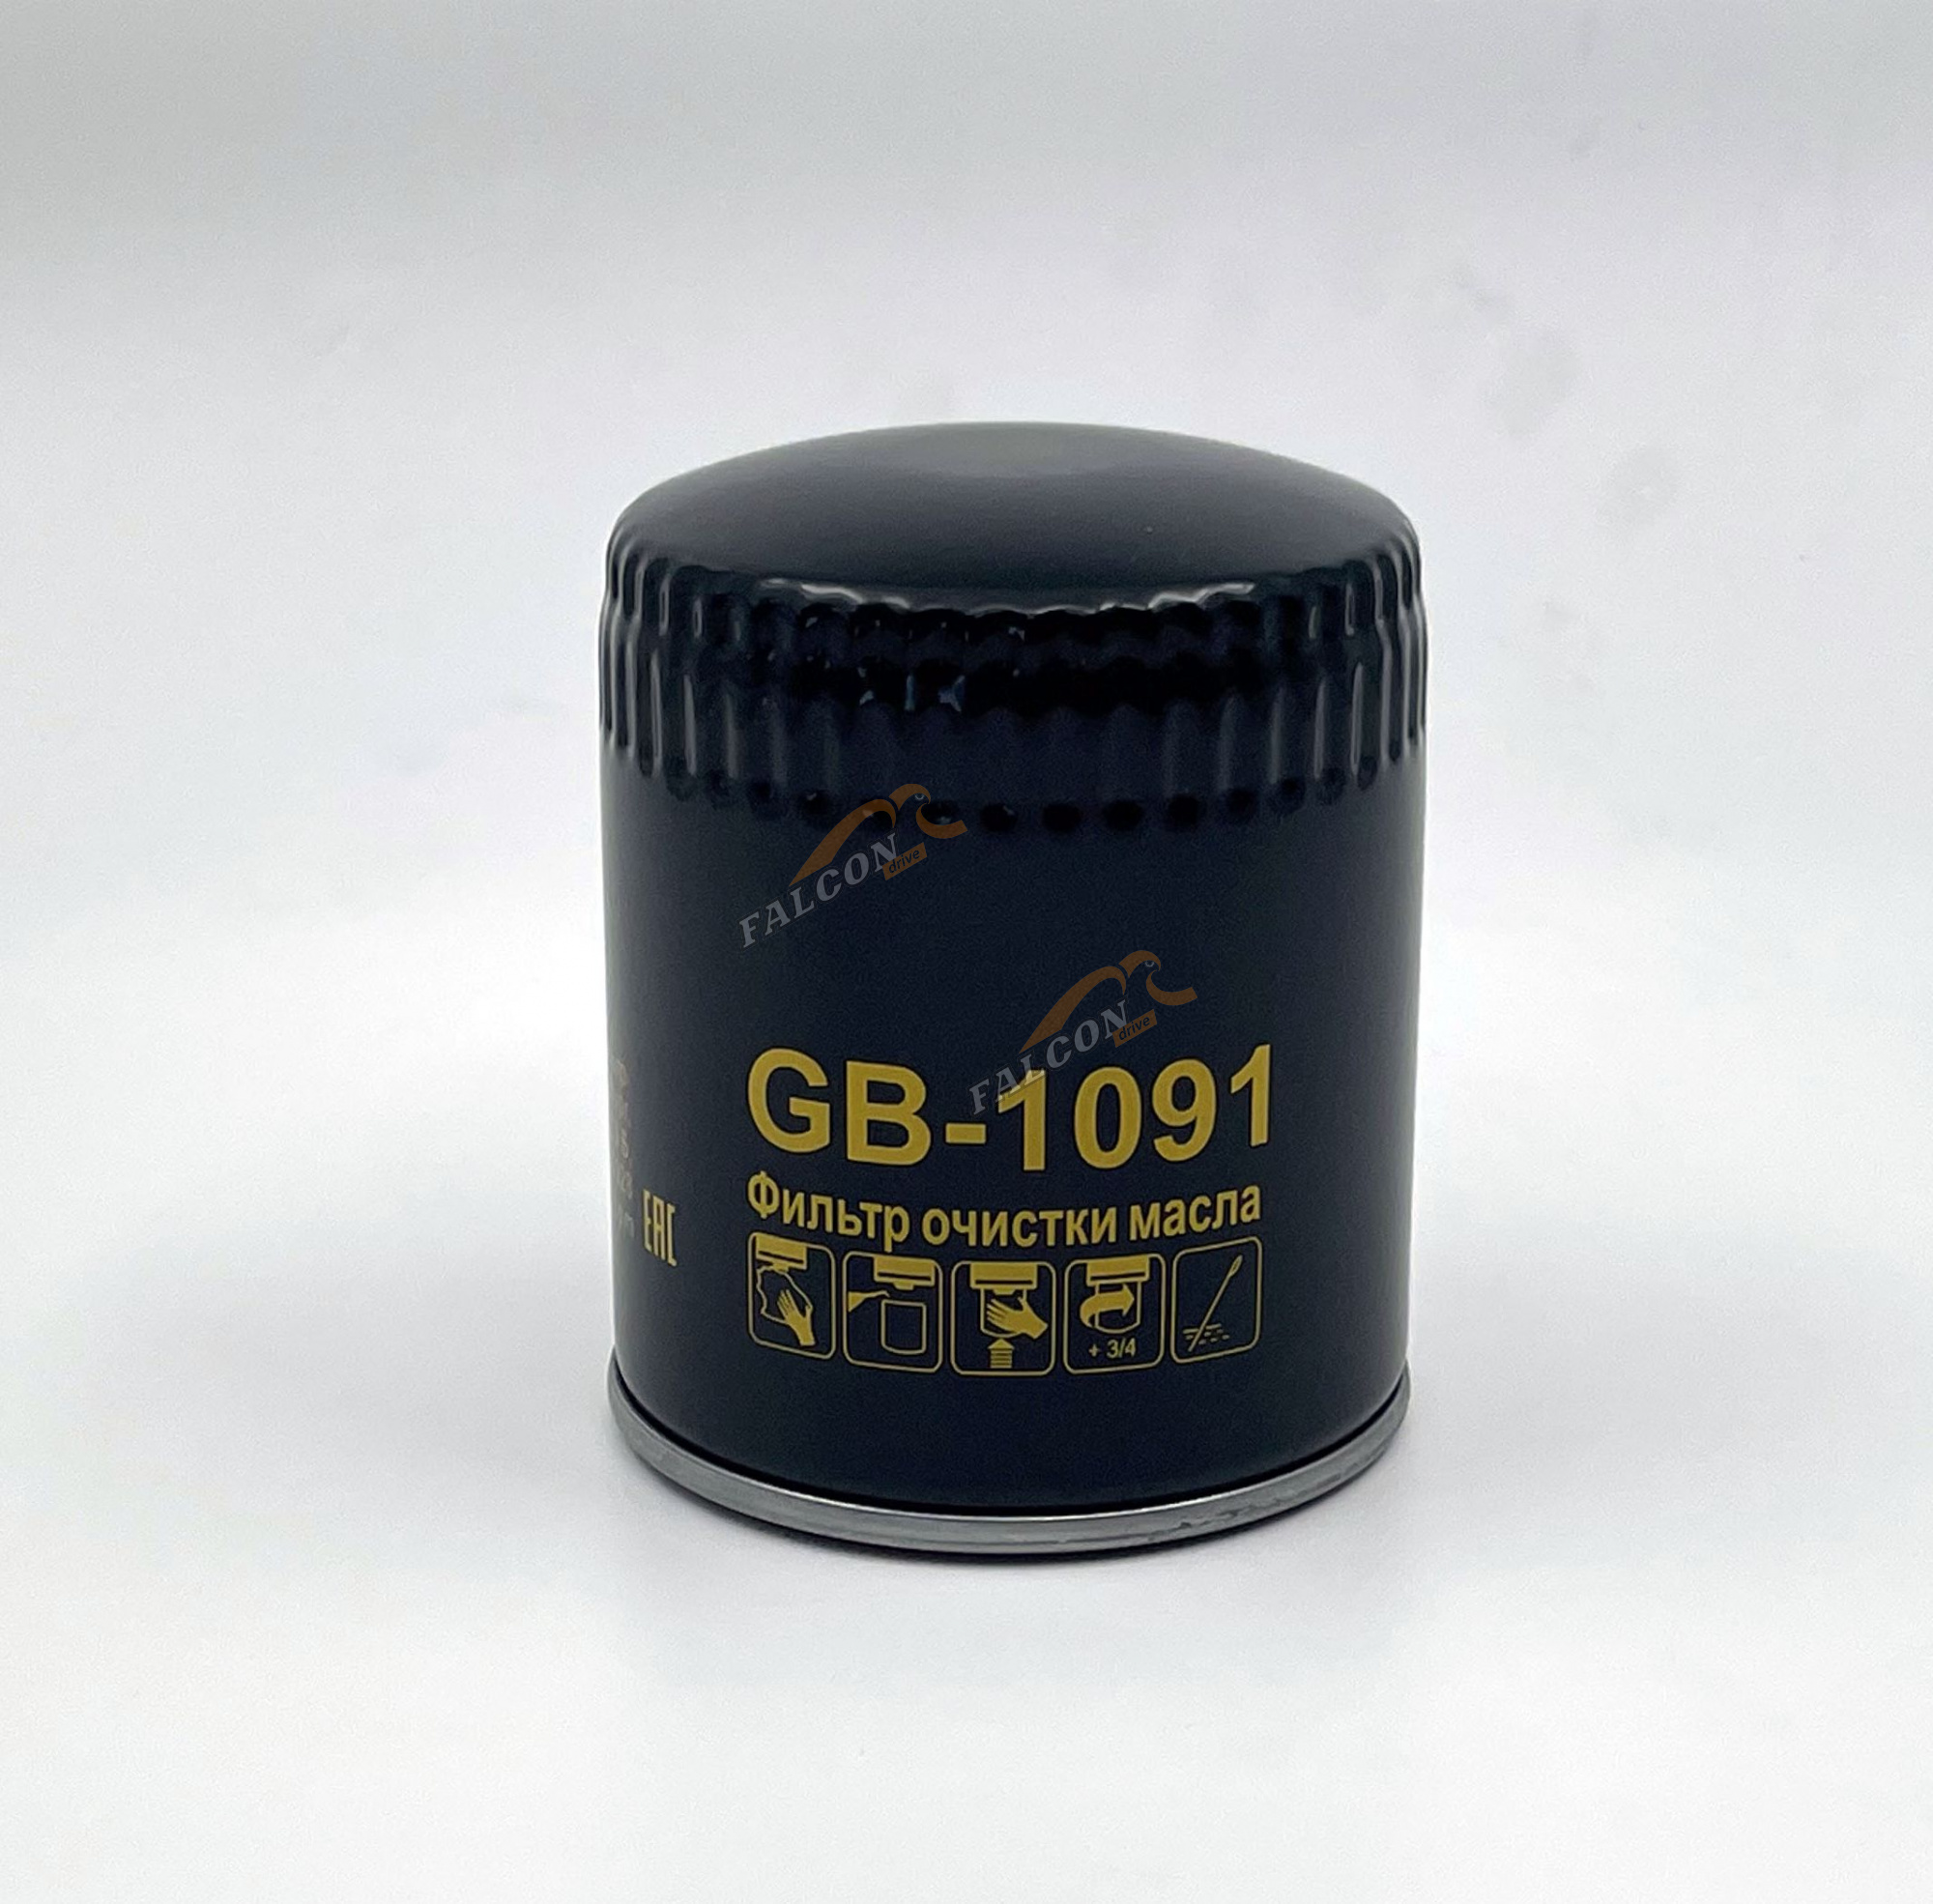 Фильтр масляный (БИГ) GB-1091 AUDI 80 90 A4 A6 A8 SKODA Superb 3U 2.8 VW Passat B4 B5 2.8